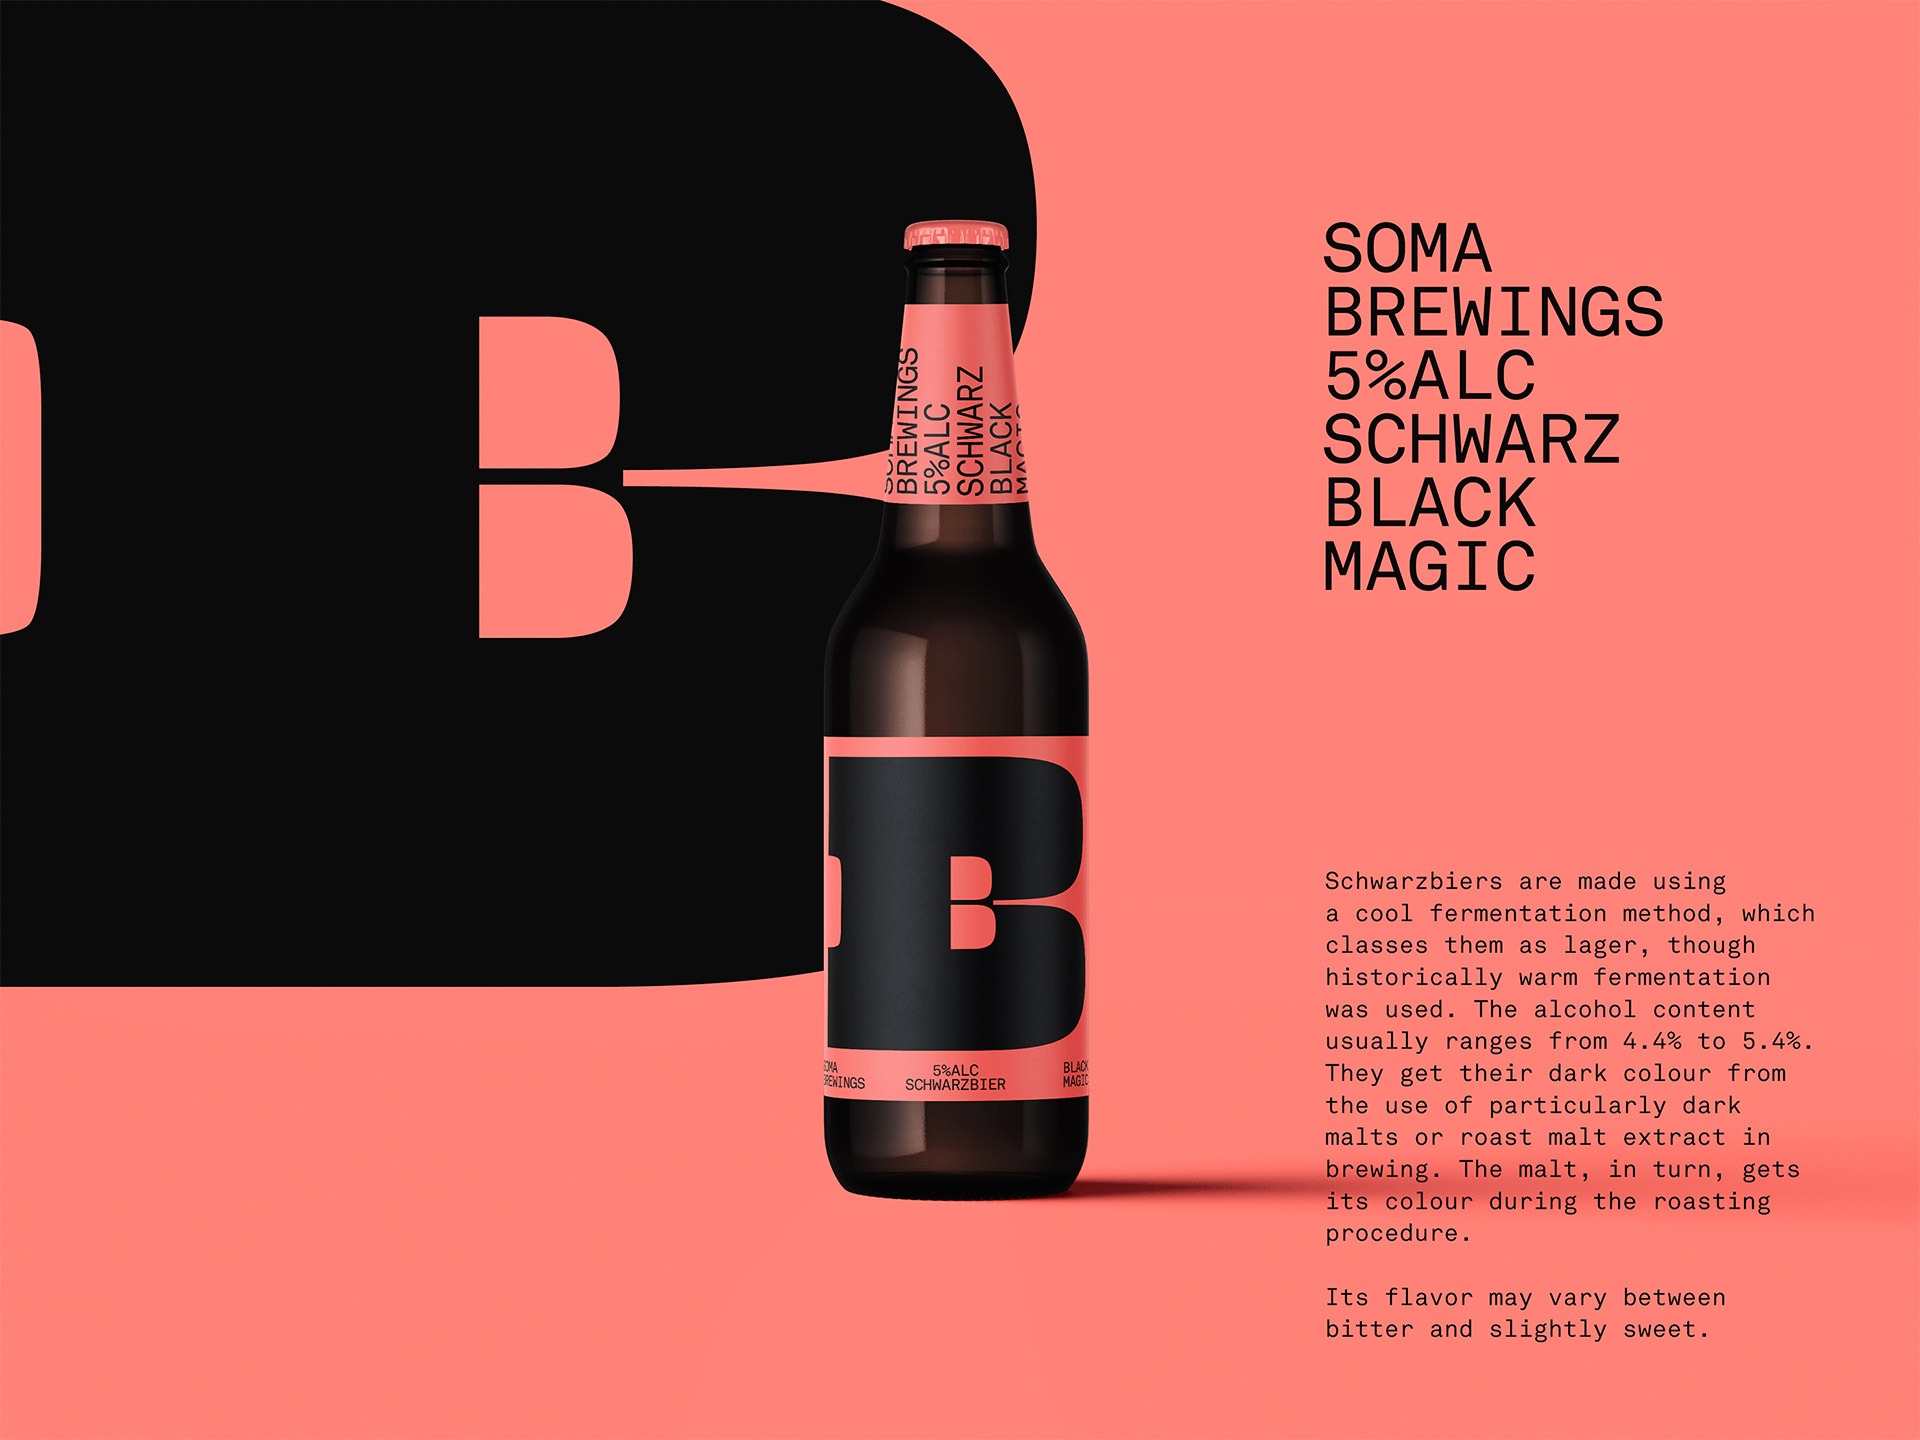 SOMA精酿啤酒品牌和包装设计